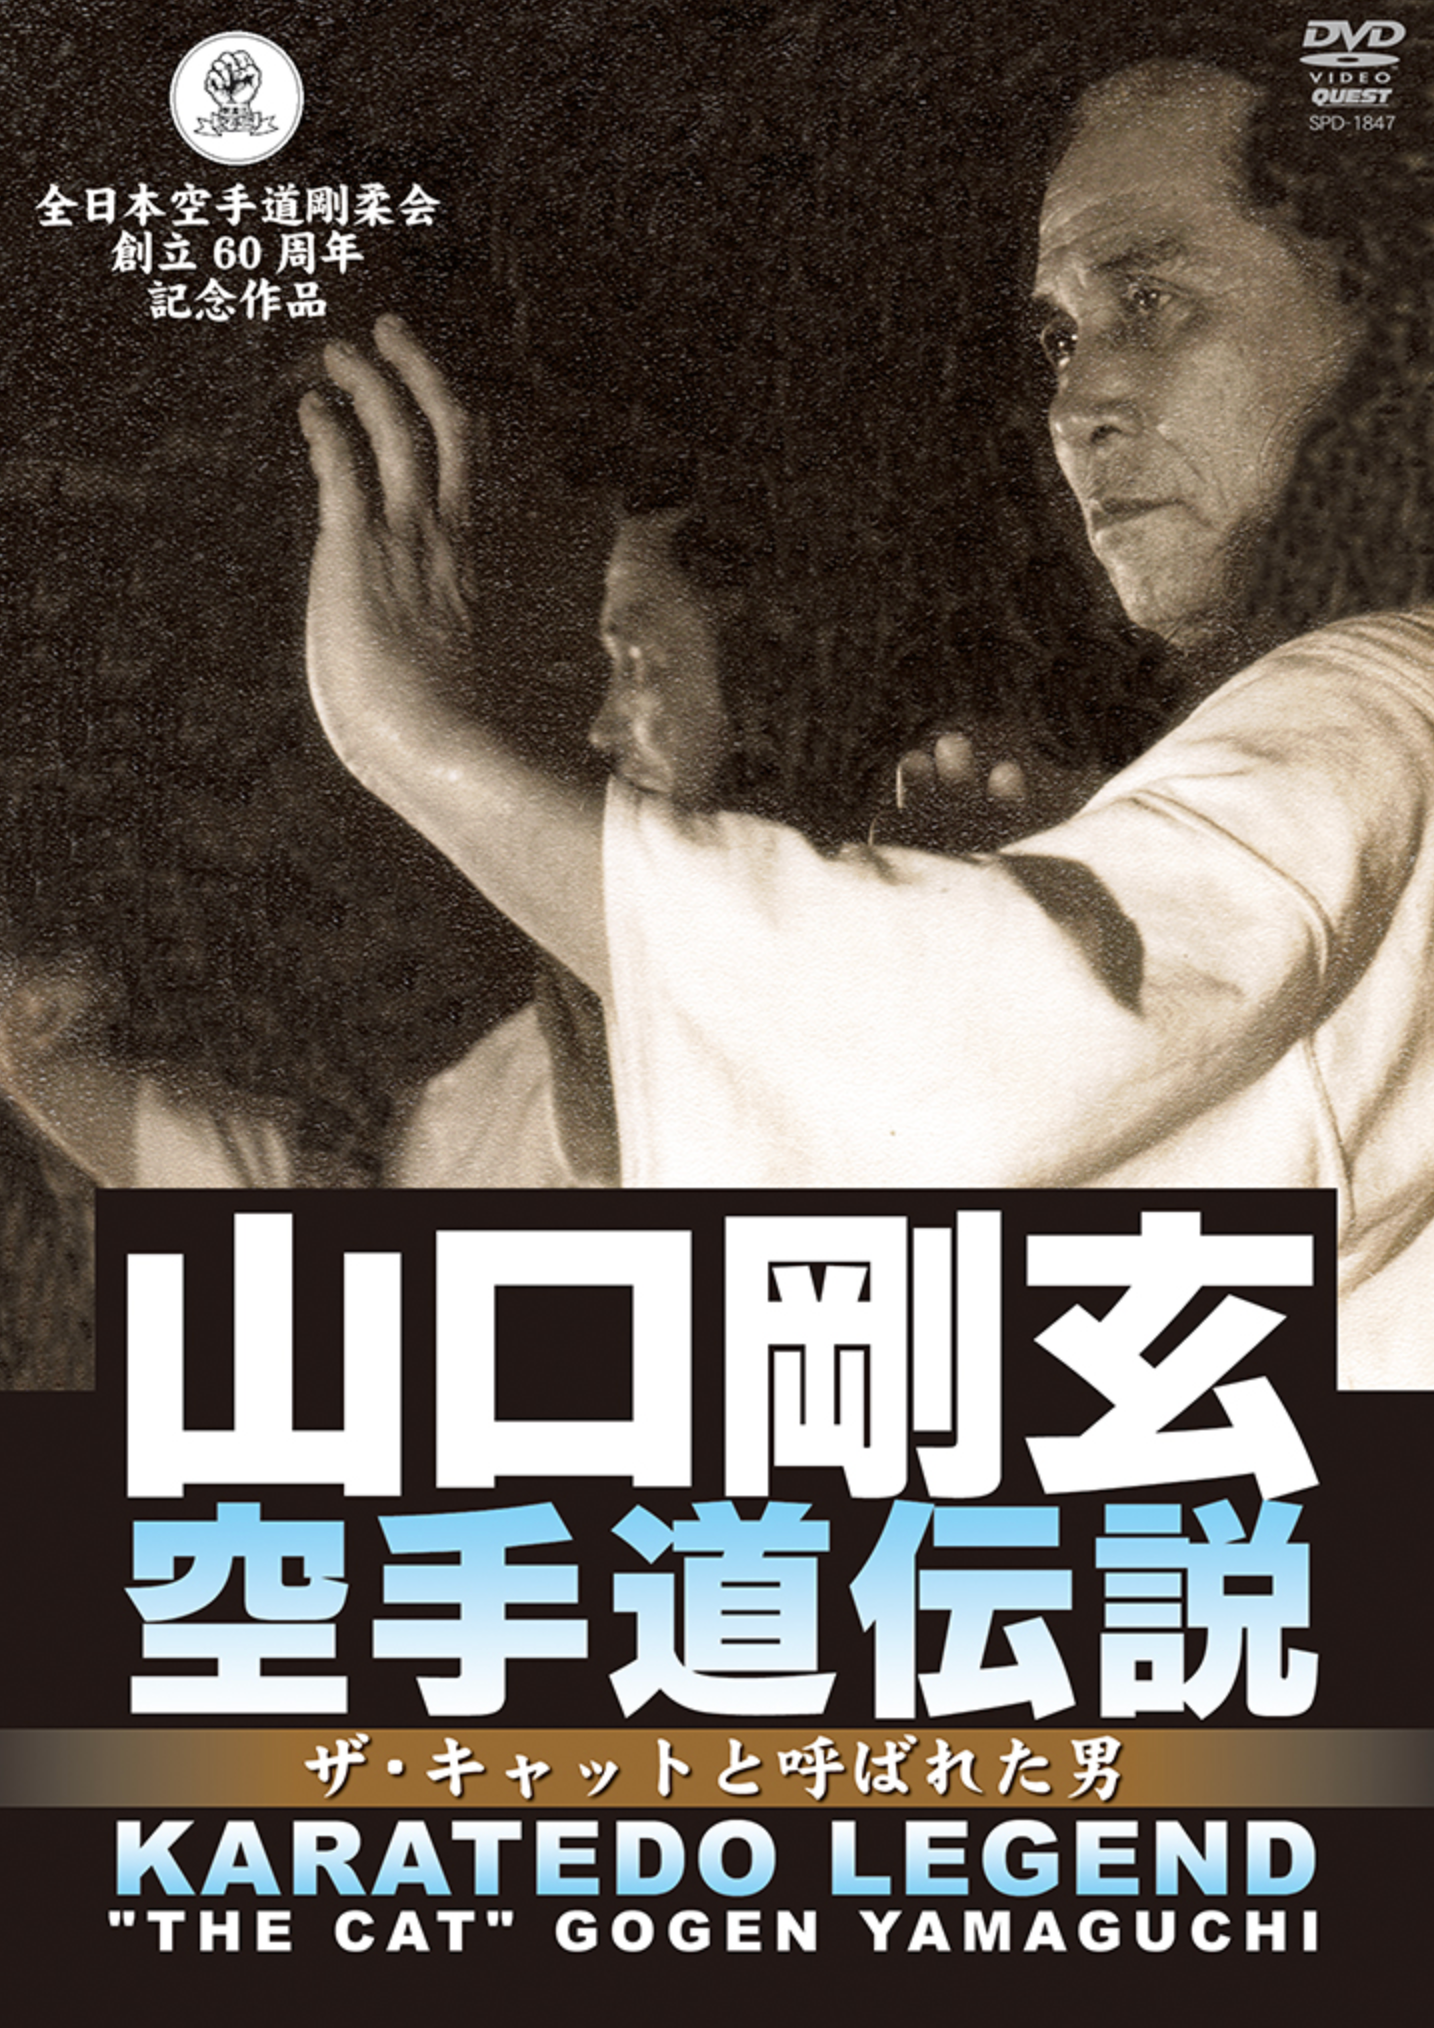 Karatedo Legend DVD with Gogen 